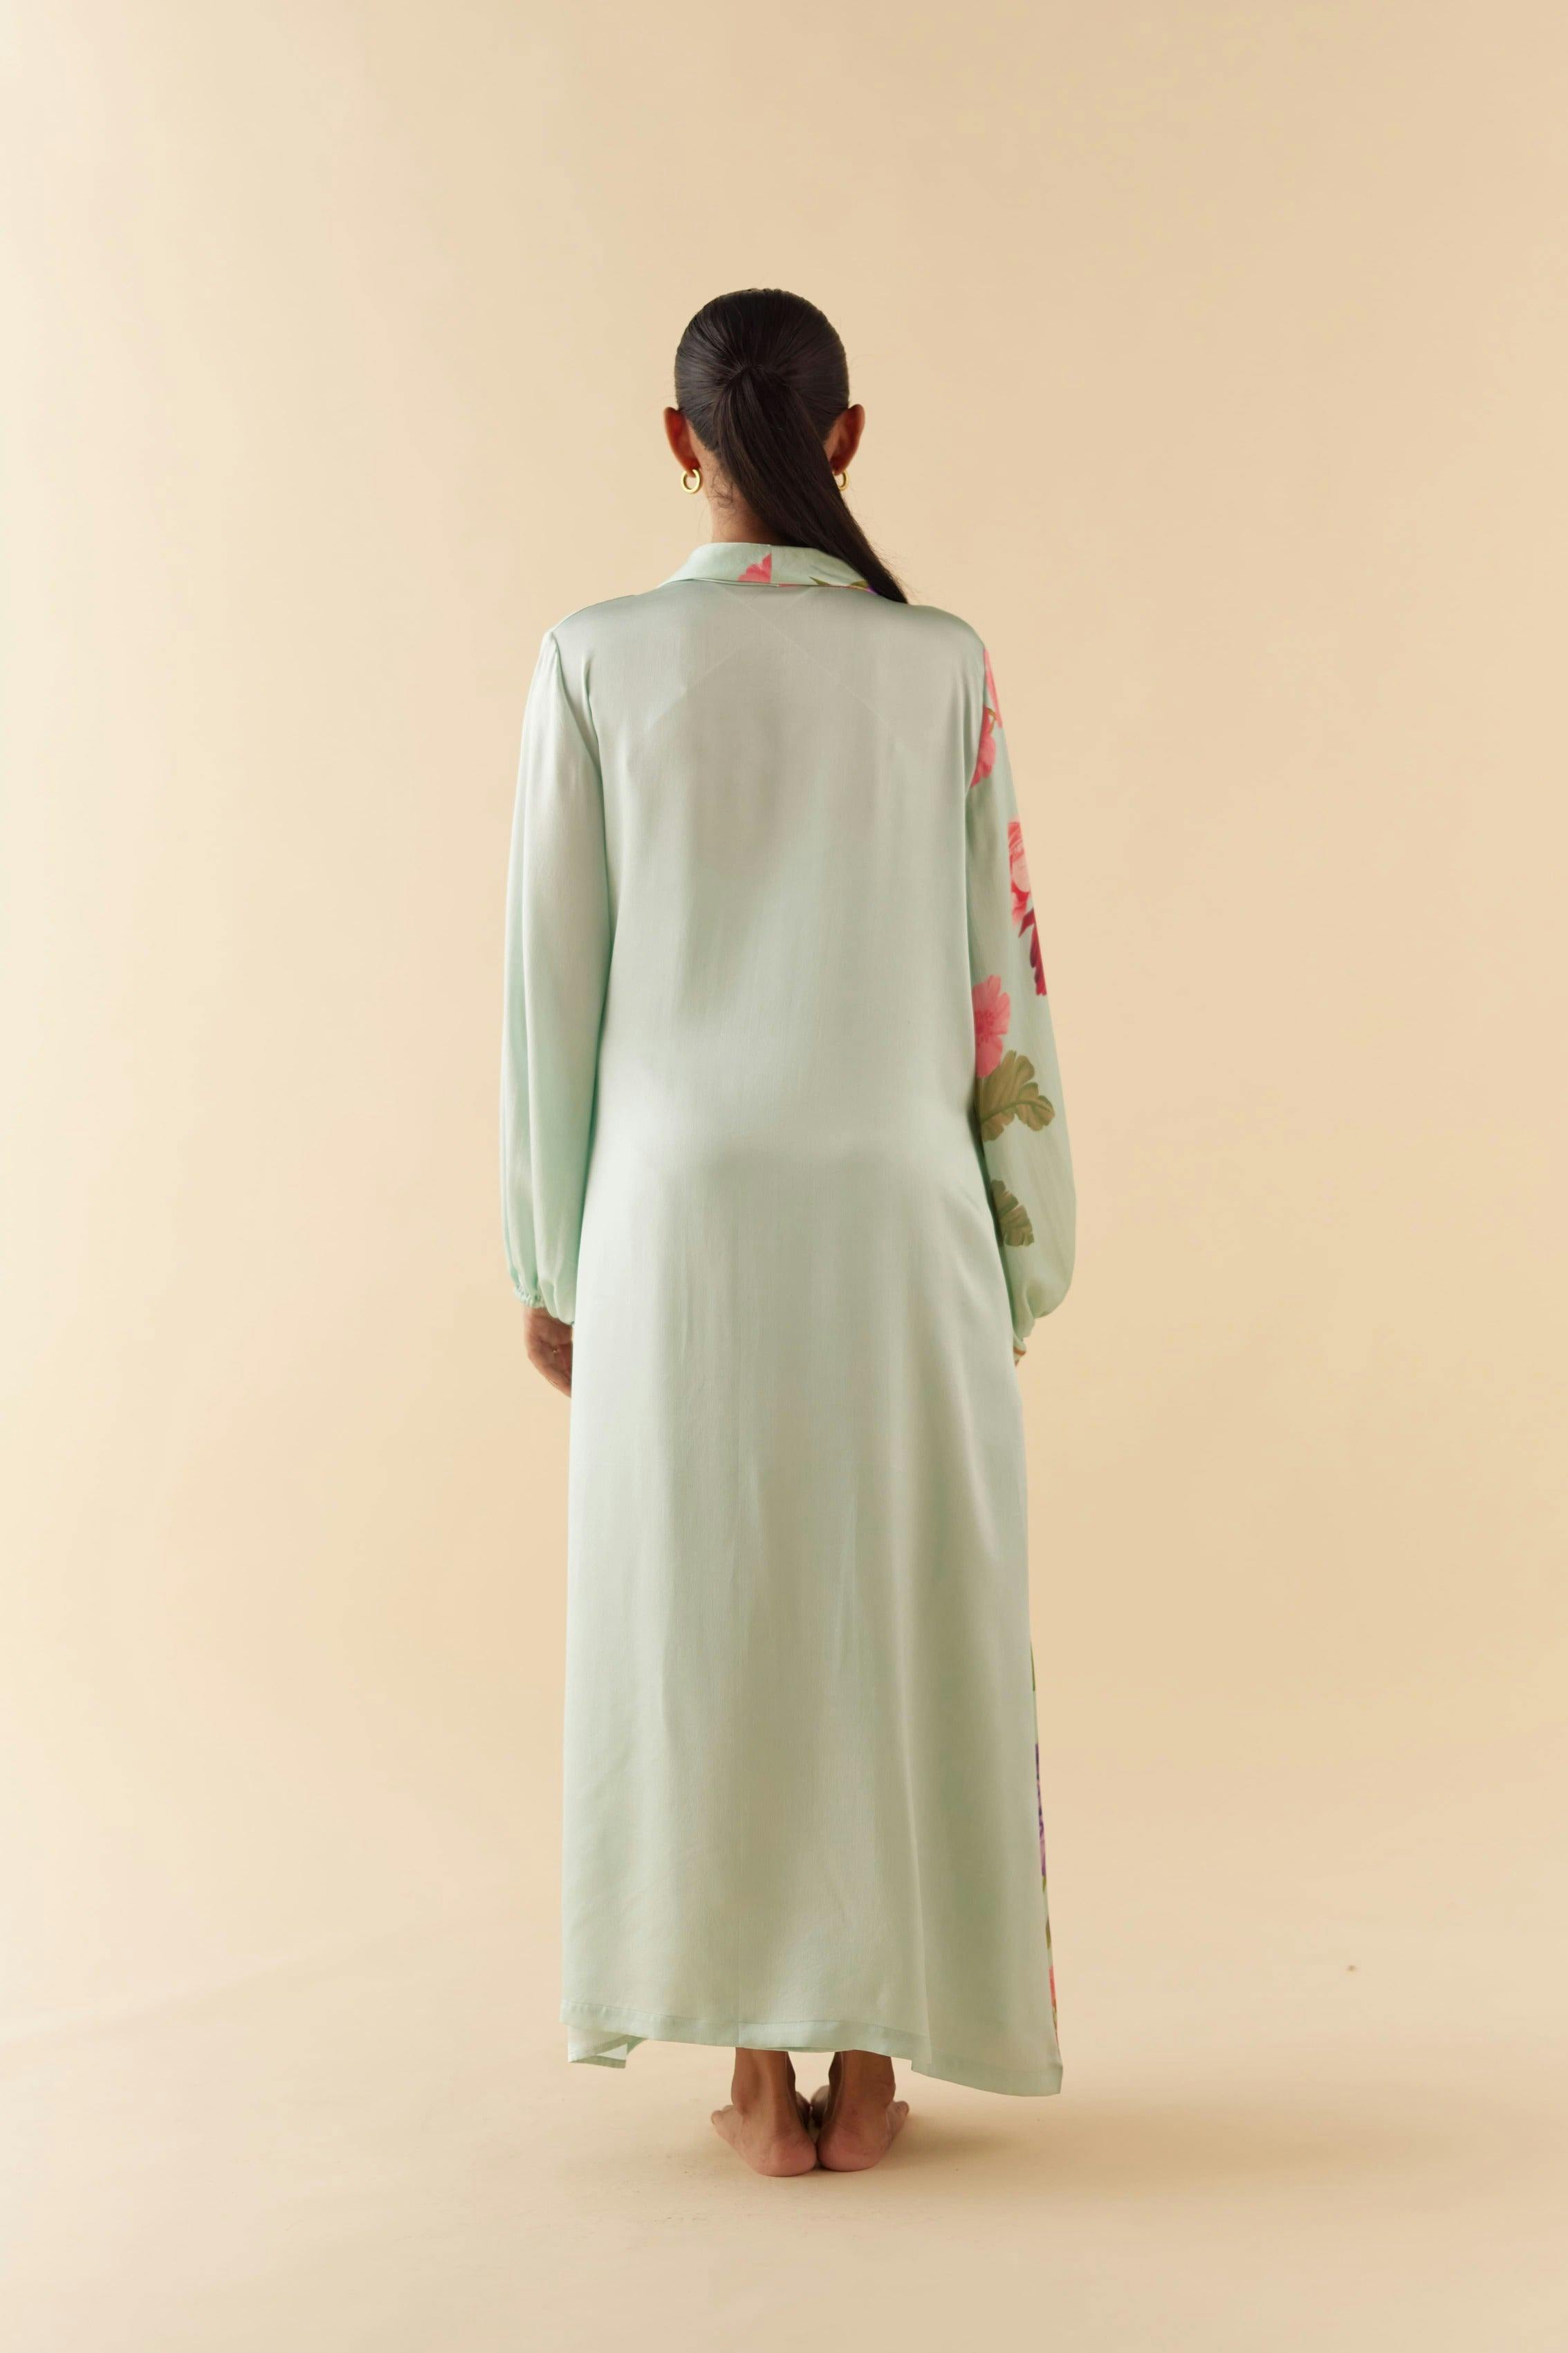 Thumbnail preview #2 for Celeste Floral Dream Silk Robe